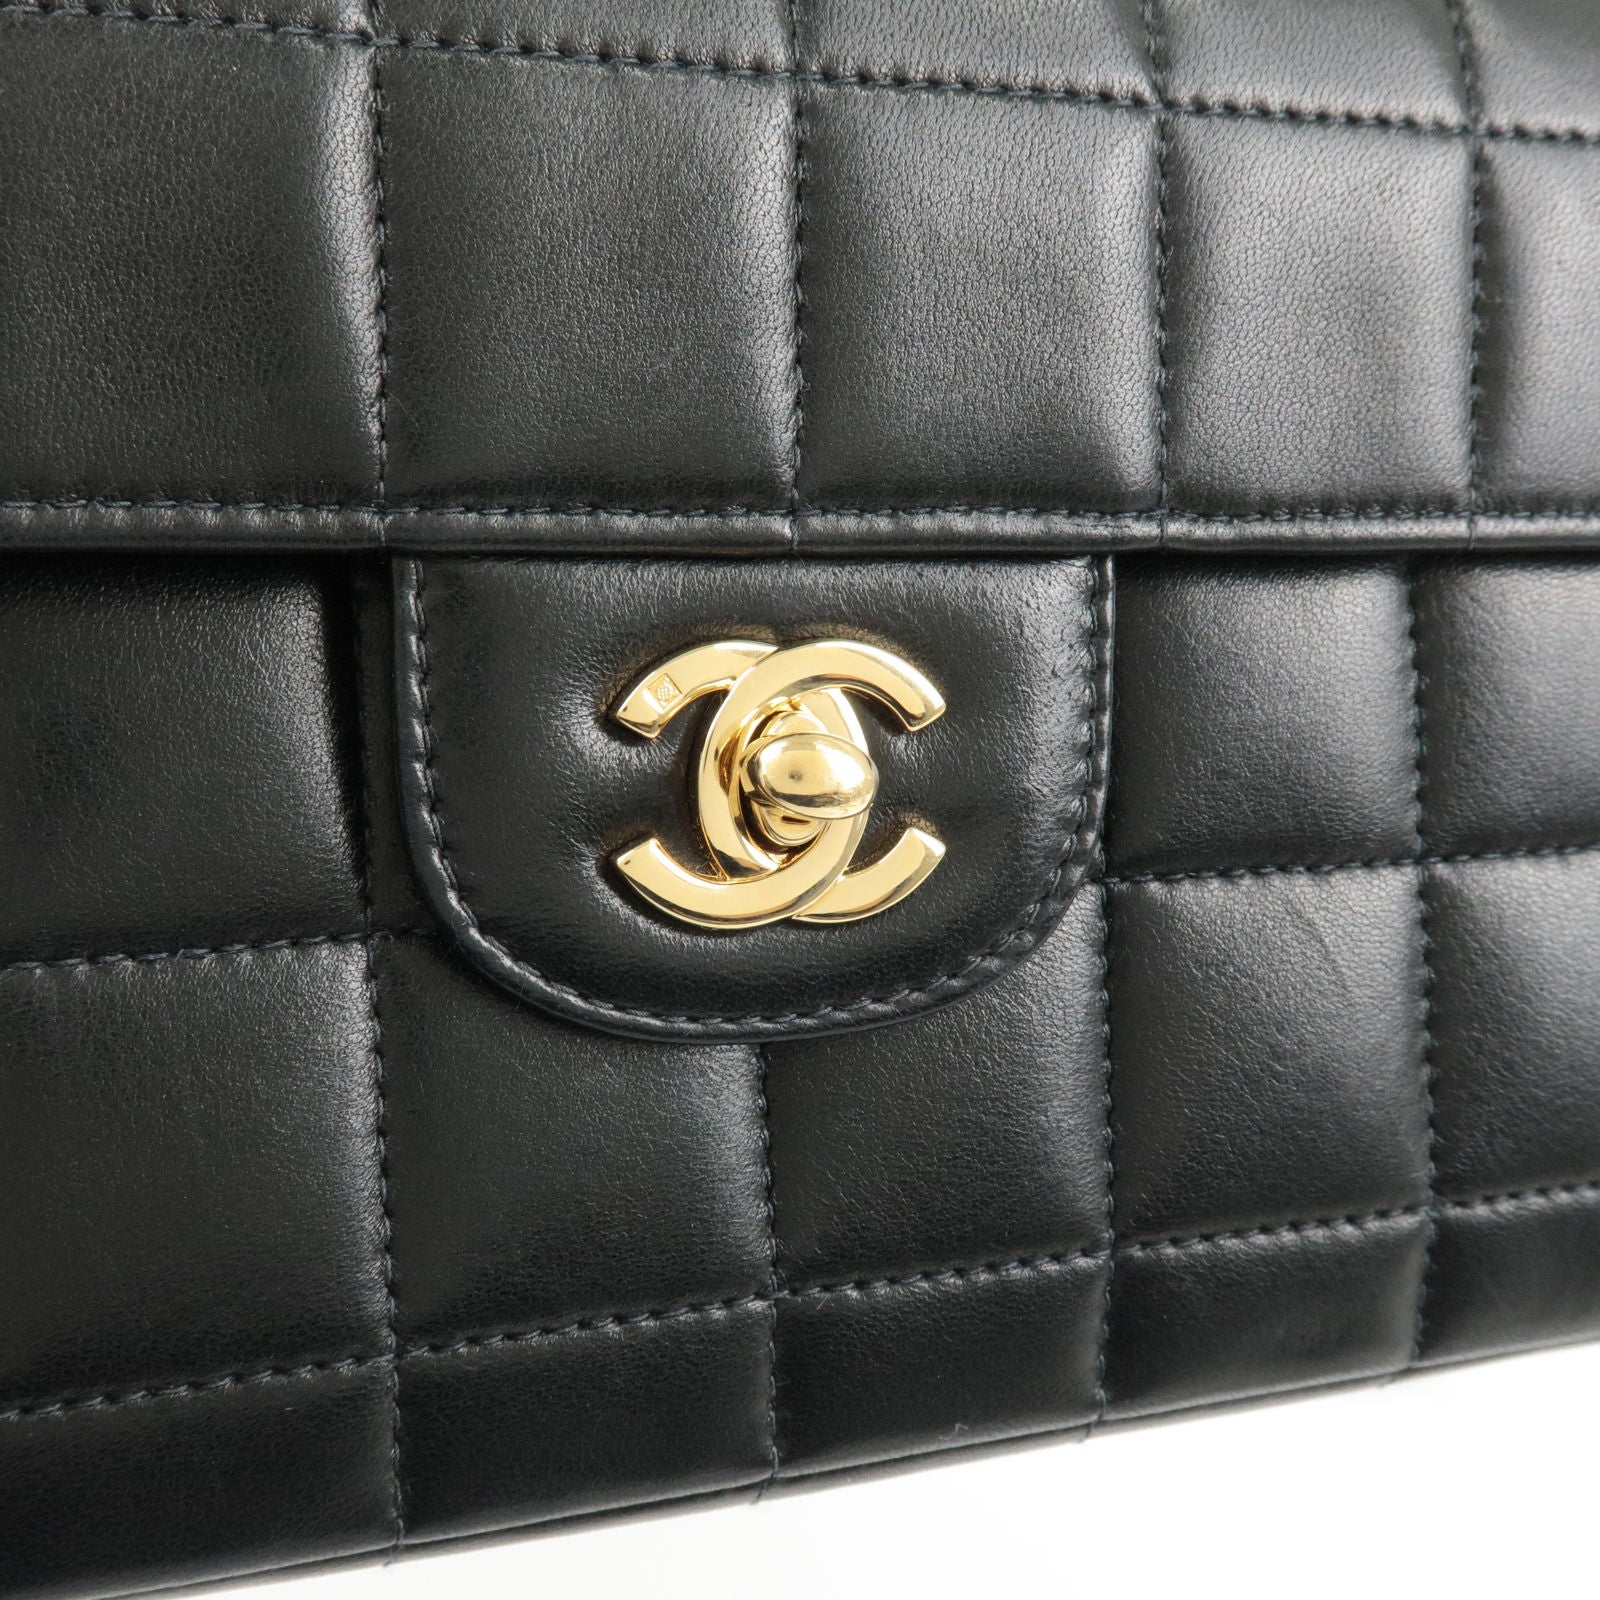 Chanel Pre-owned Timeless Classic Flap Shoulder Bag - Black